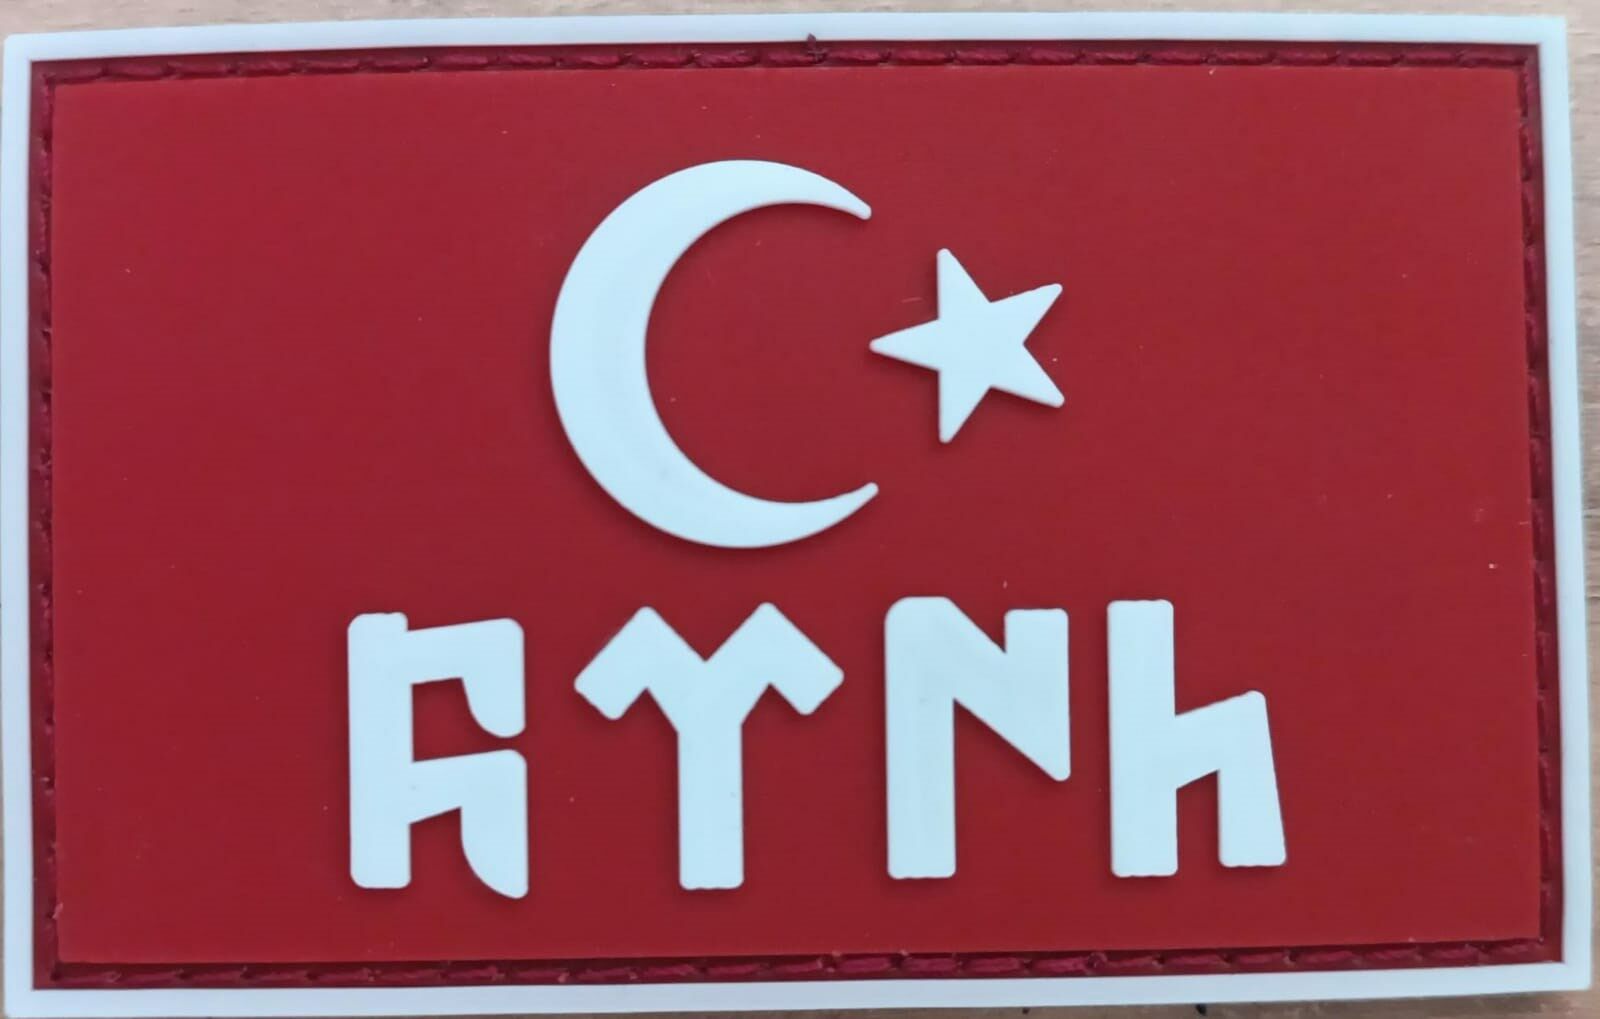 Türk Kırmızı Plastik Patch